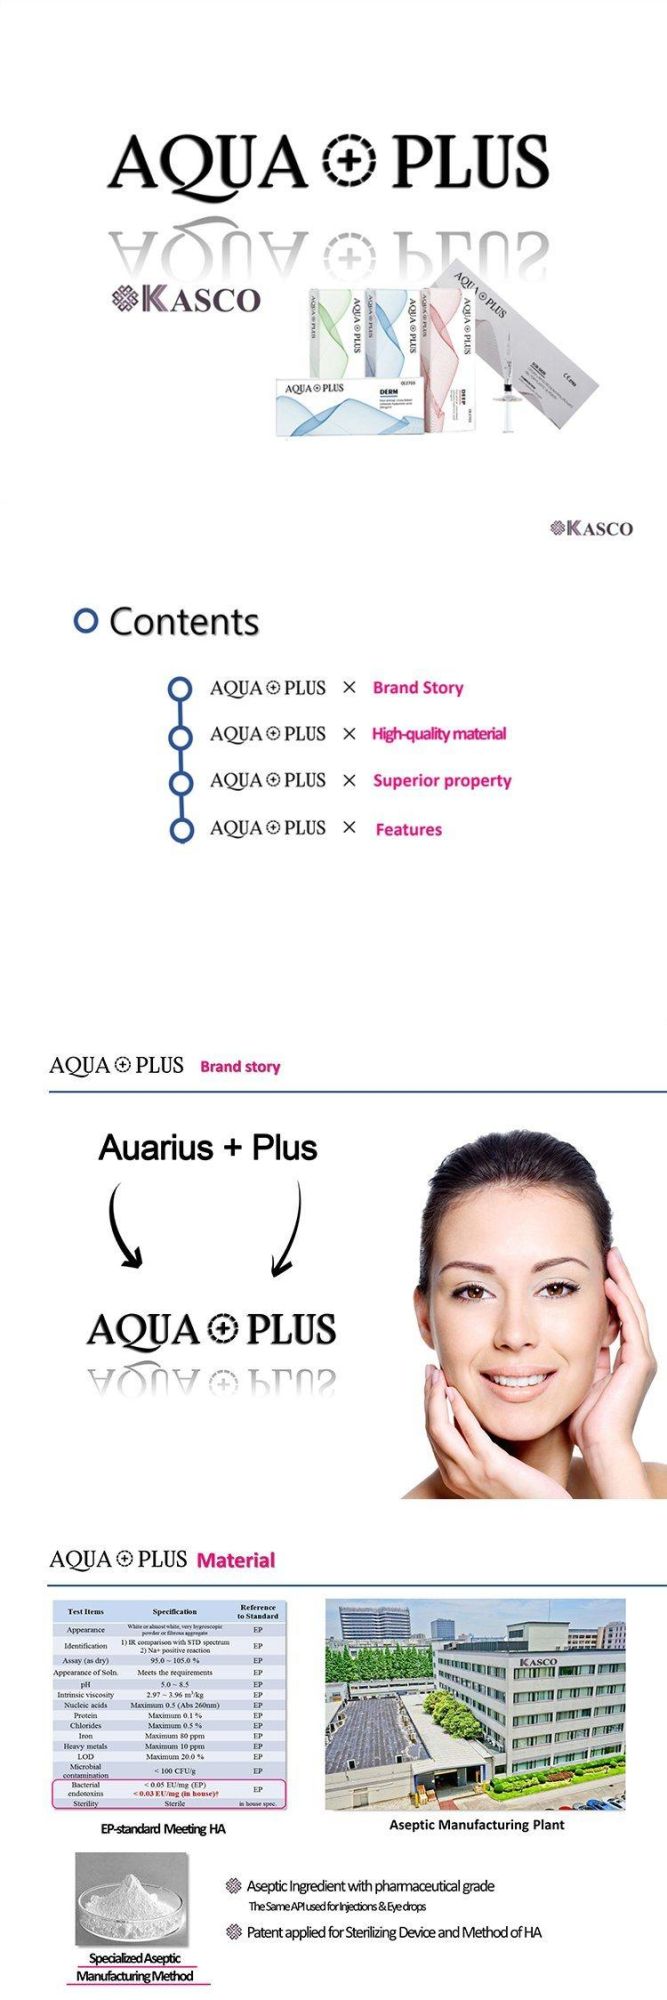 Aqua Plus Long Lasting Hyaluronic Acid Injection Dermal Filler 1ml Hurtless